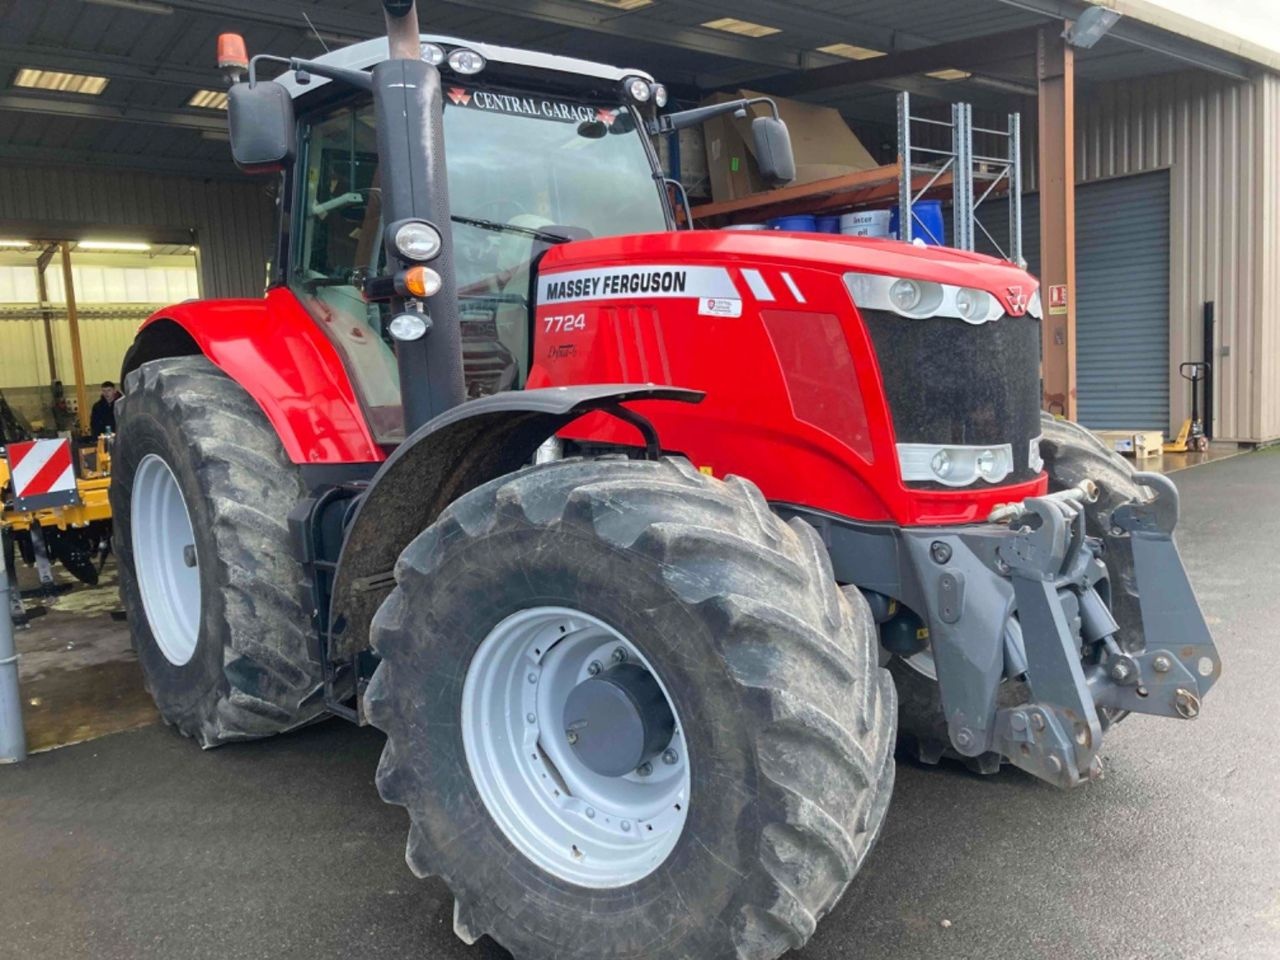 Massey Ferguson 7724 tractor €74,000